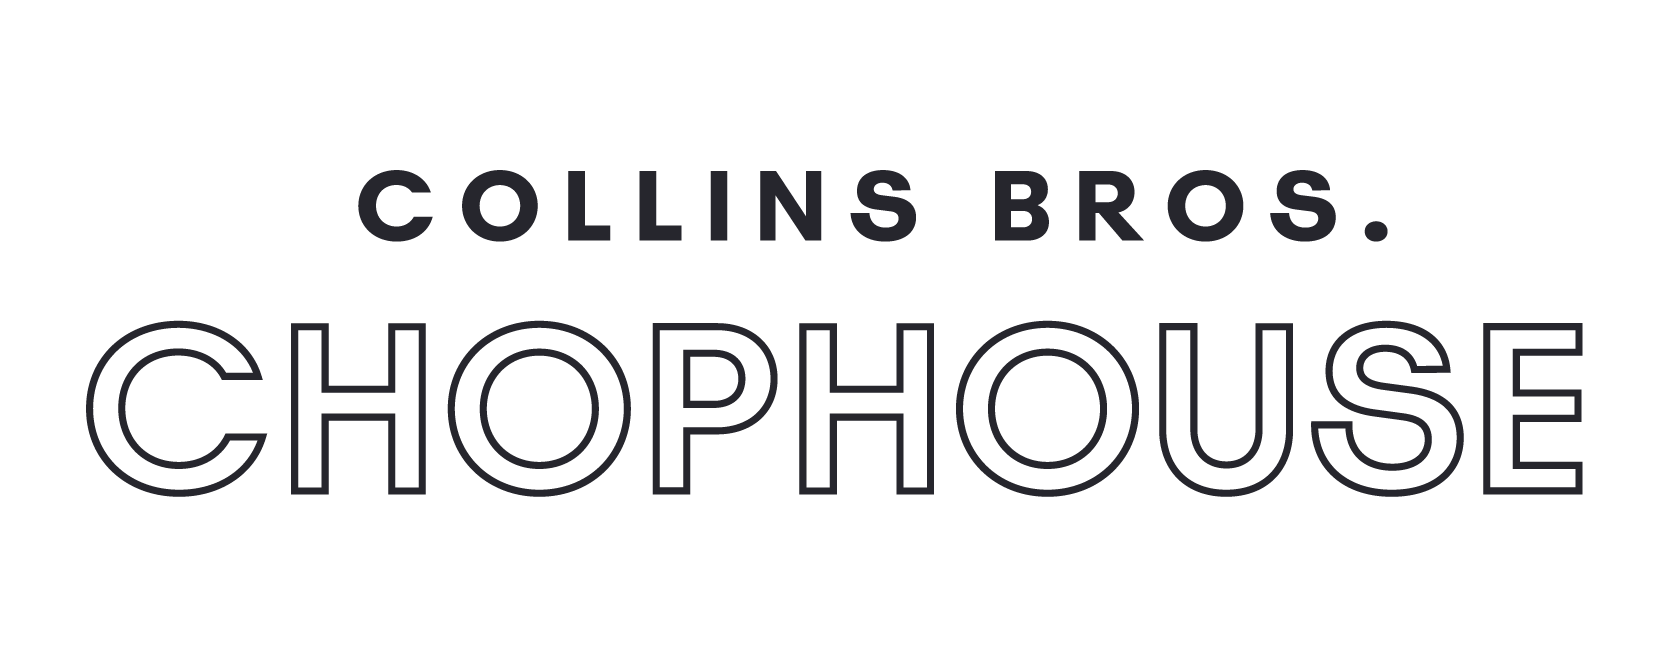 Collins Bros Chophouse Website Logos-13.png